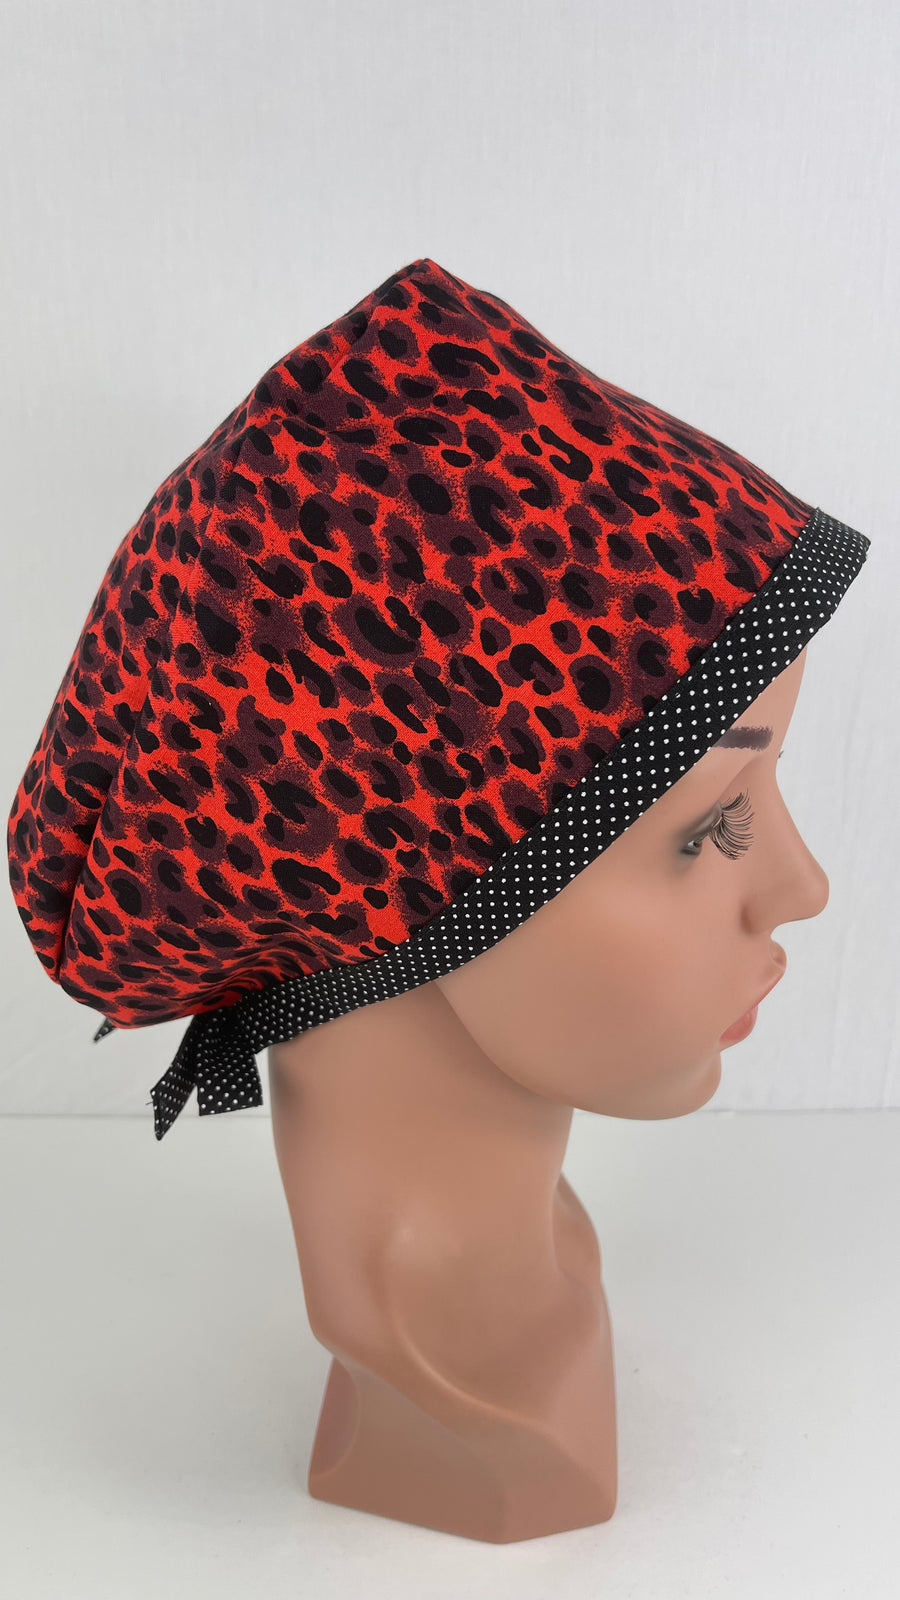 Cheetah Print in Red Pixie Cap